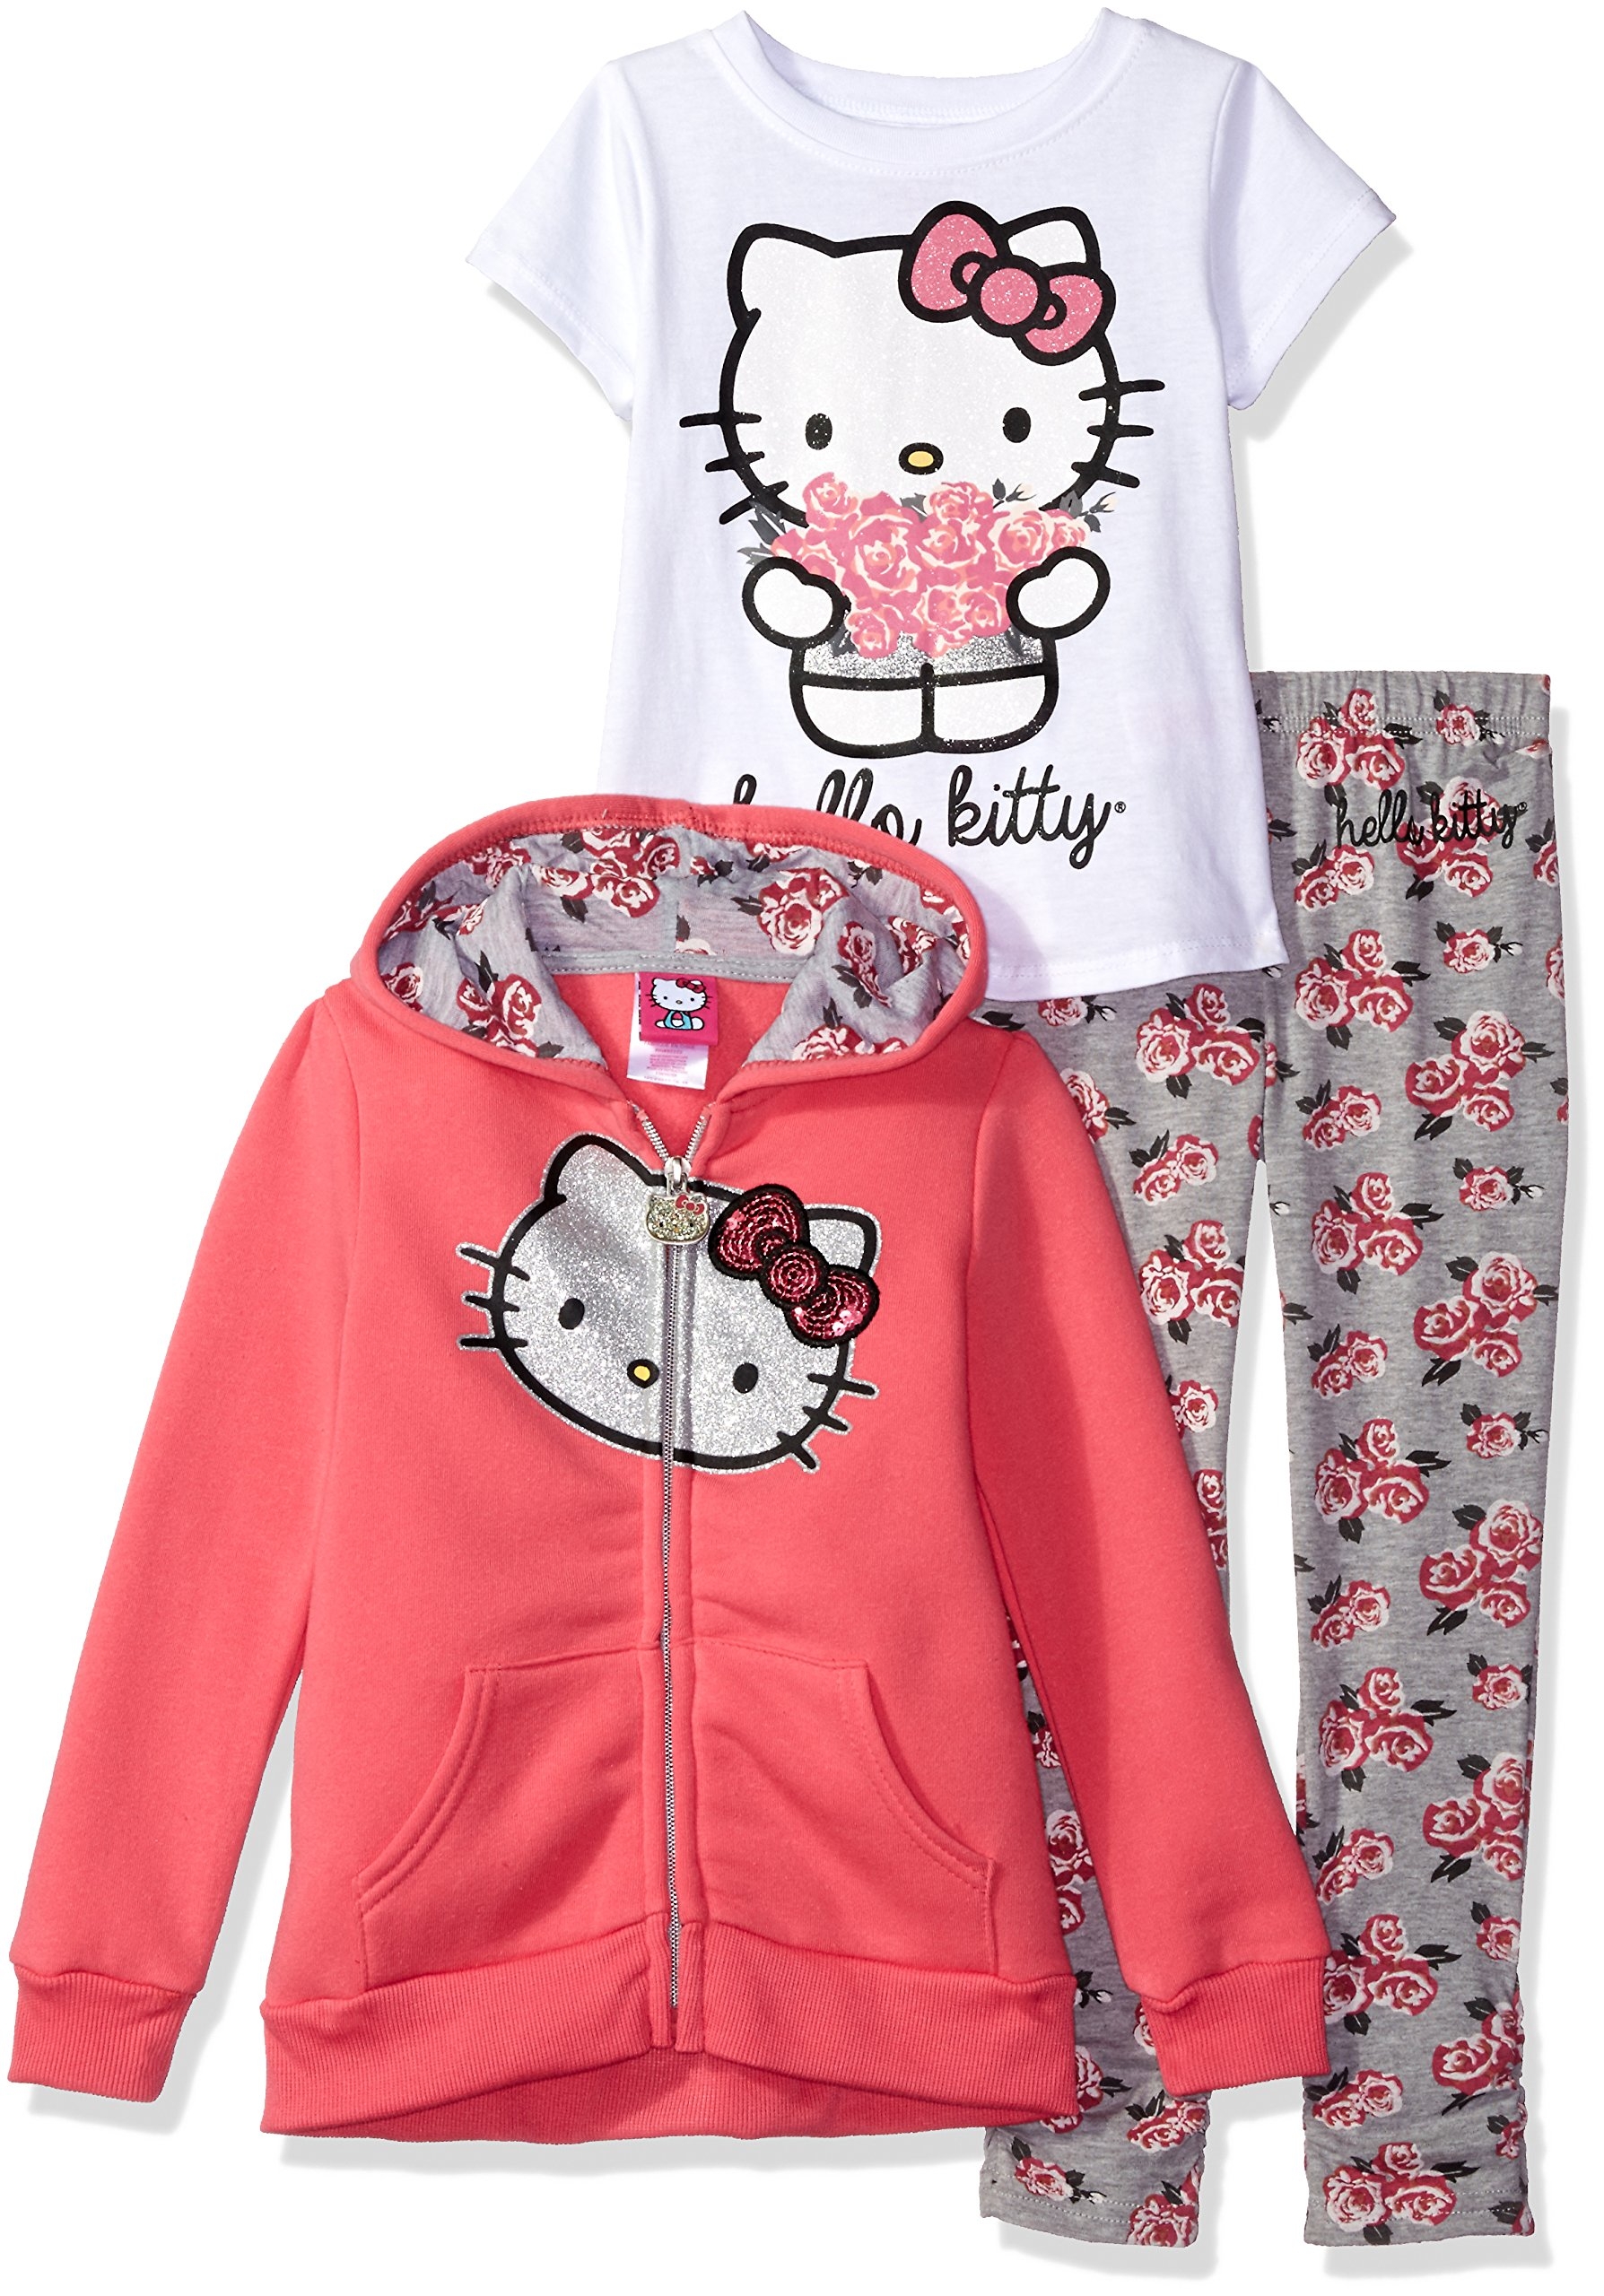 Хэллоу одежда. Хелло Китти одежда. Одежда для девочки с Хеллоу Китти. Хелойкитти с одеждой. Хеллоу Китти одеждына hello Kitty.